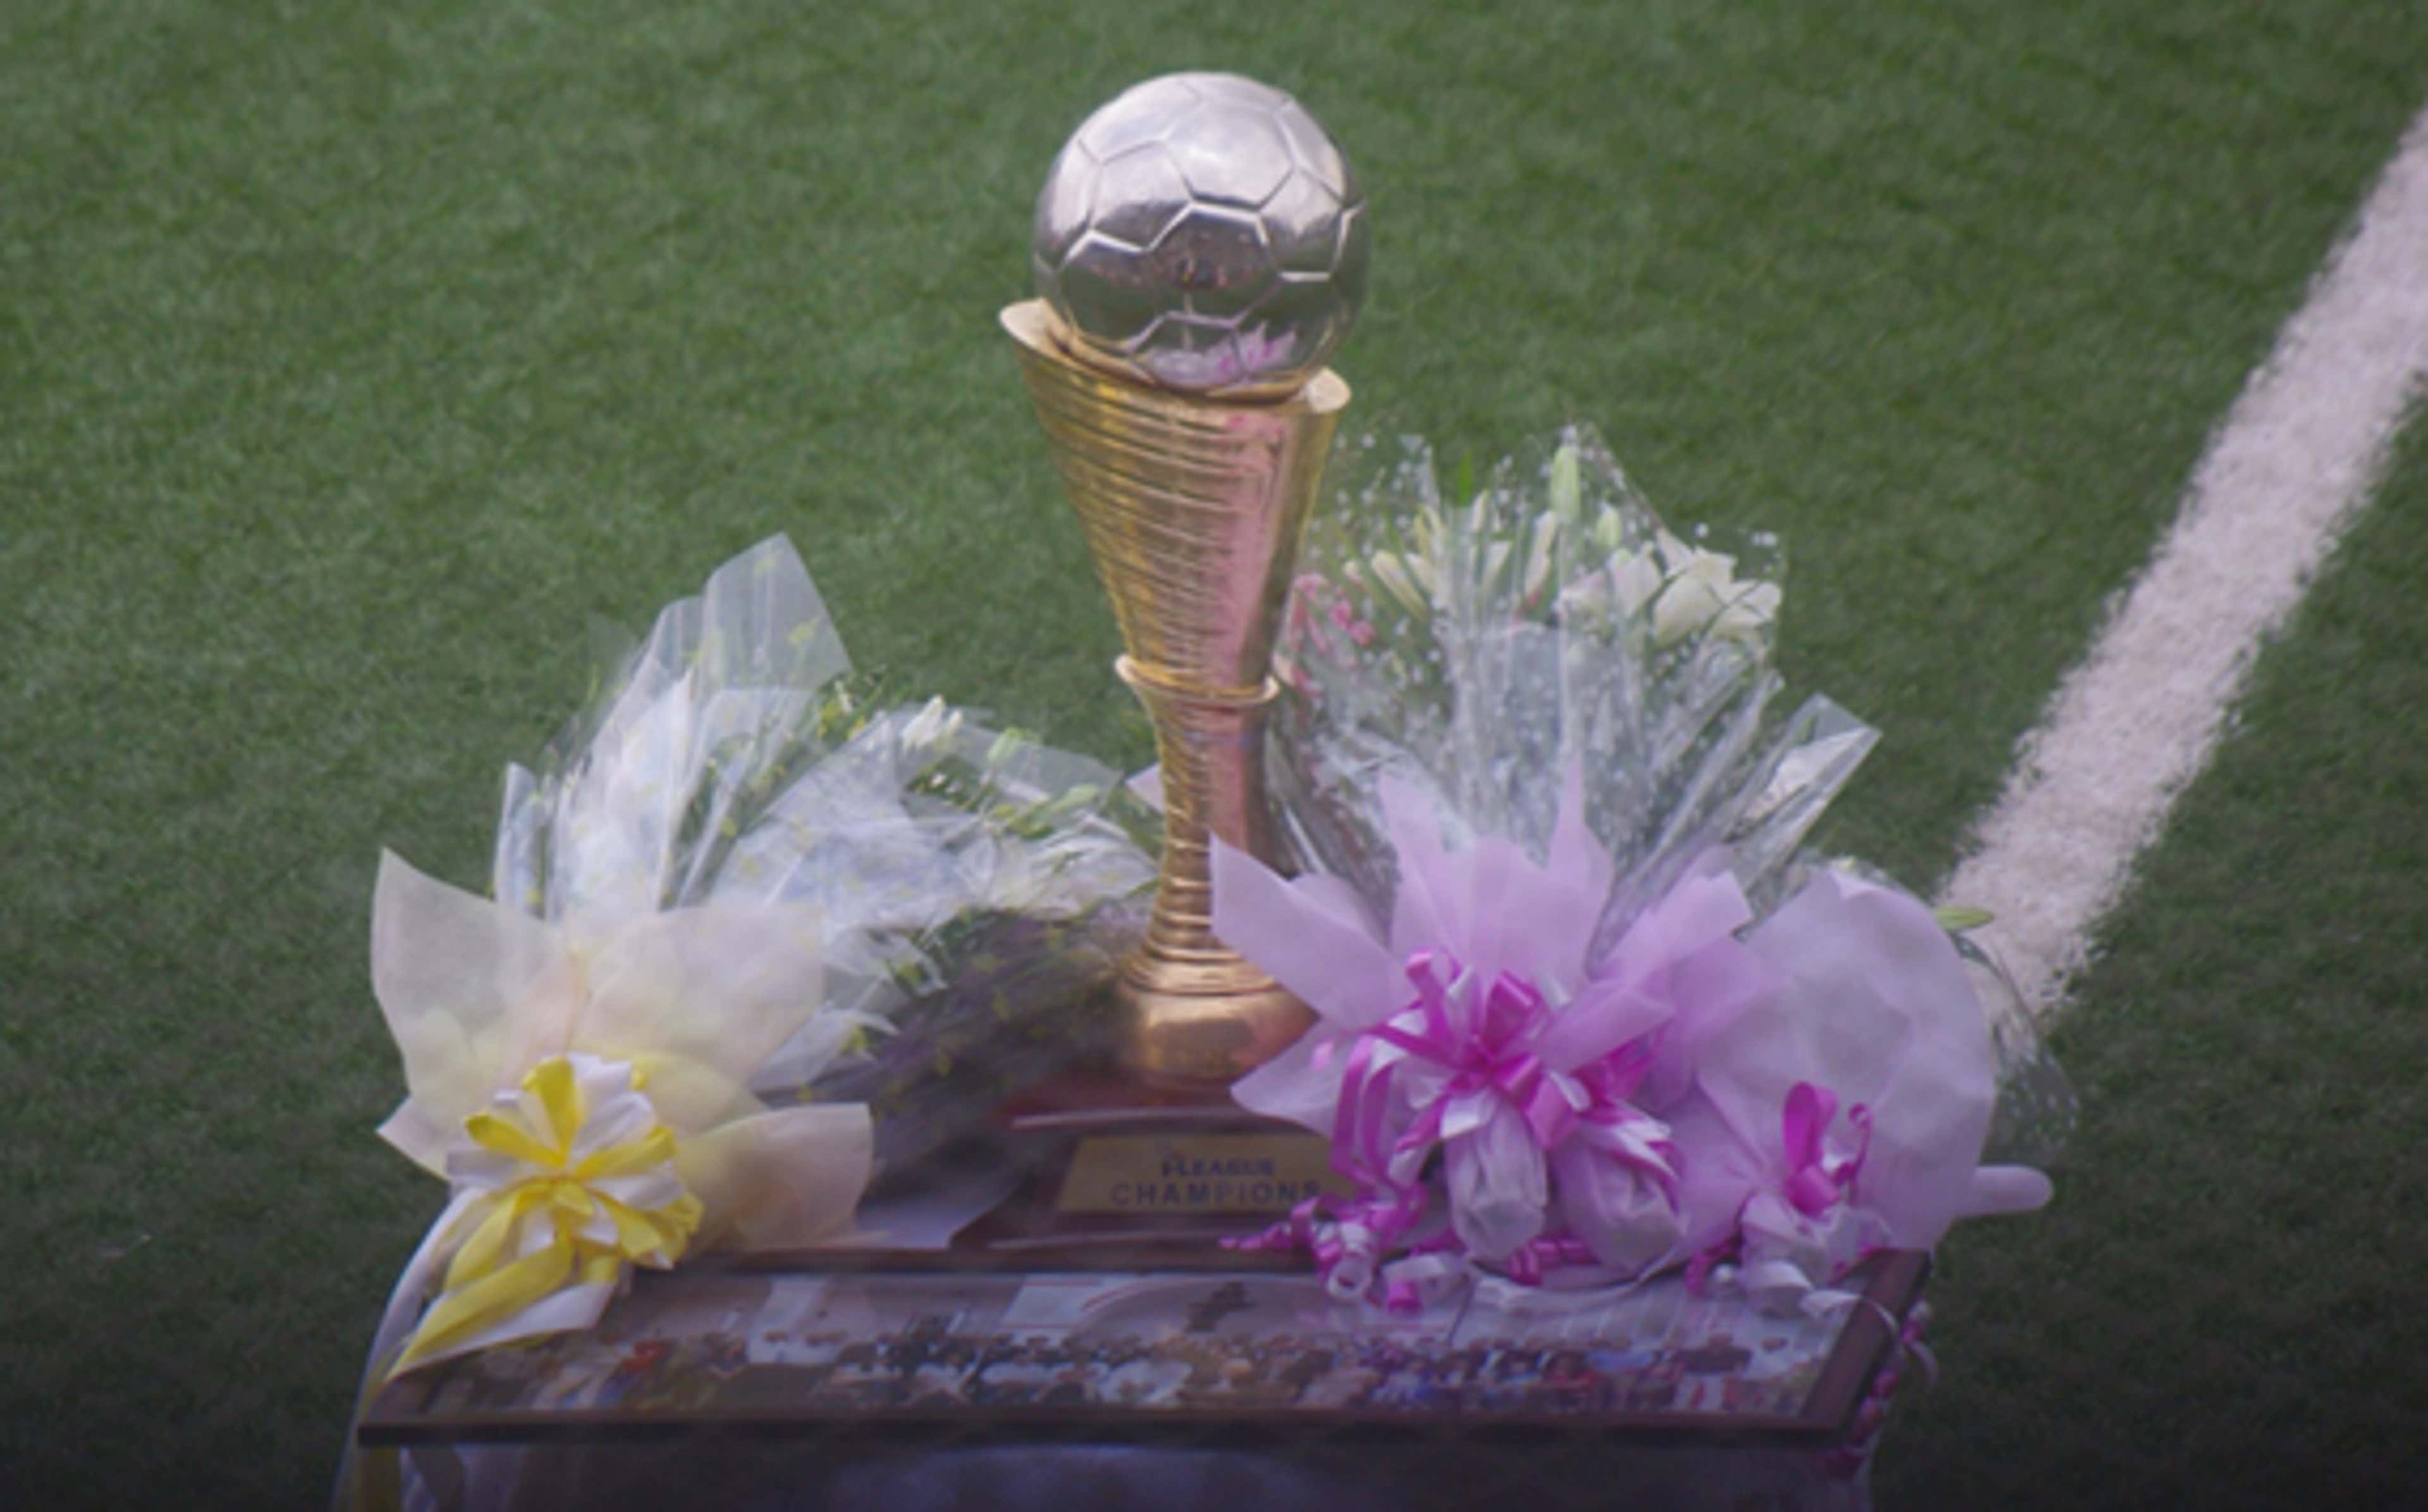 I-League Trophy